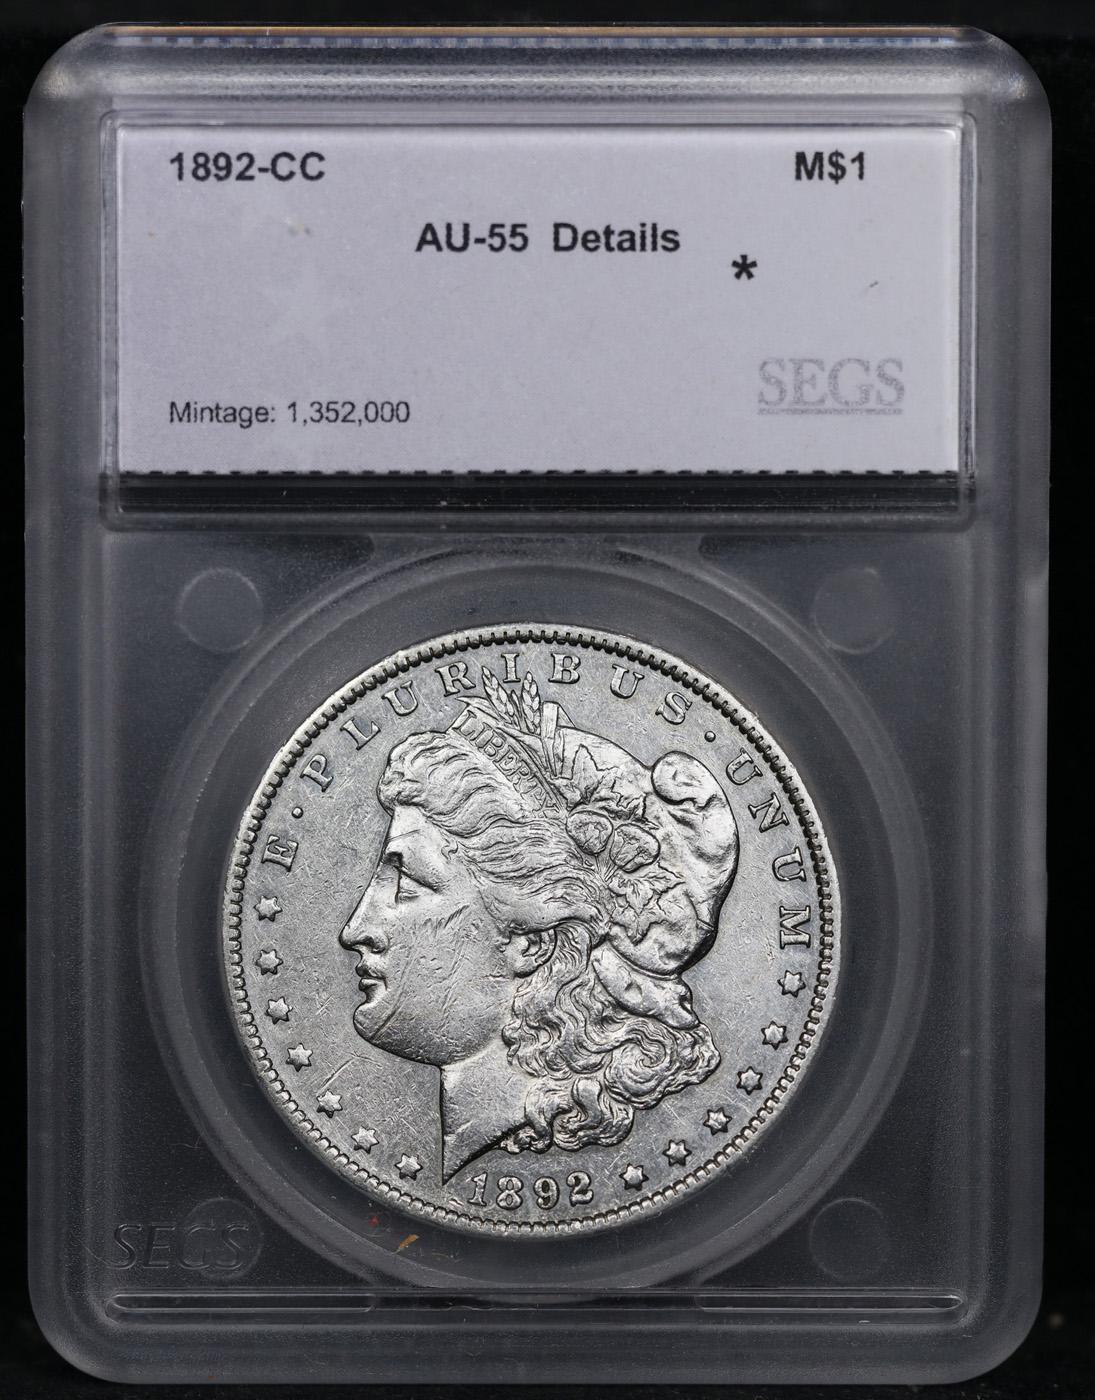 ***Auction Highlight*** 1892-cc Morgan Dollar $1 Graded au55 details By SEGS (fc)